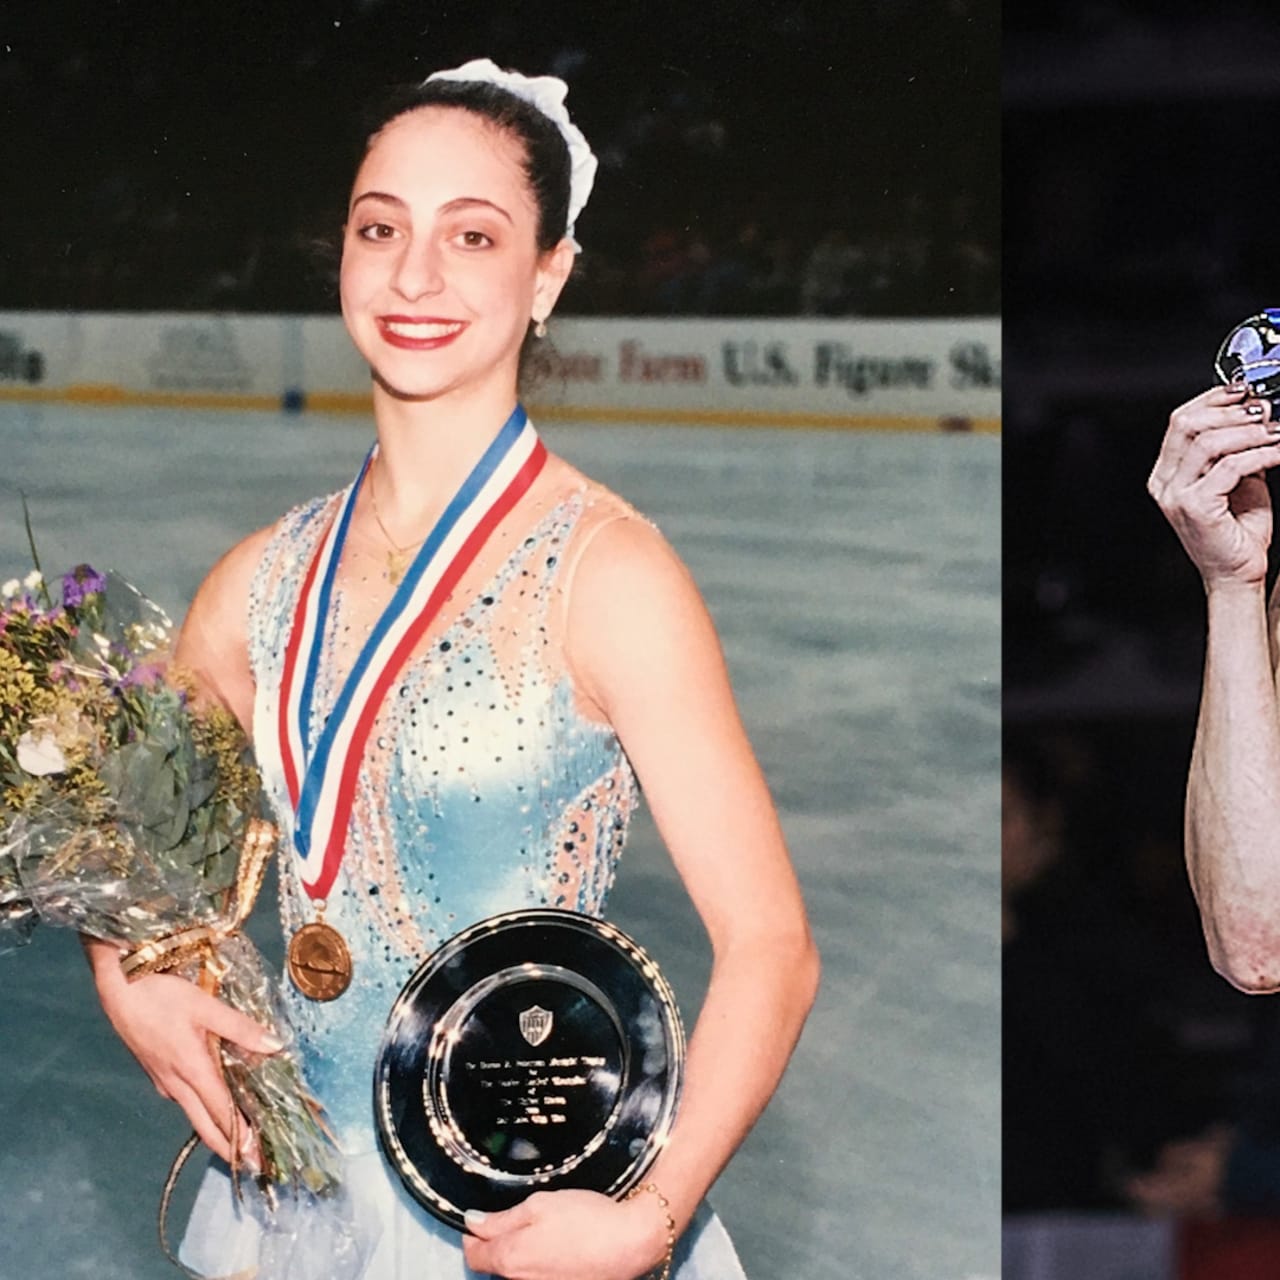 Deanna Stellato-Dudek, 40, seeks medal at figure skating worlds - The  Washington Post